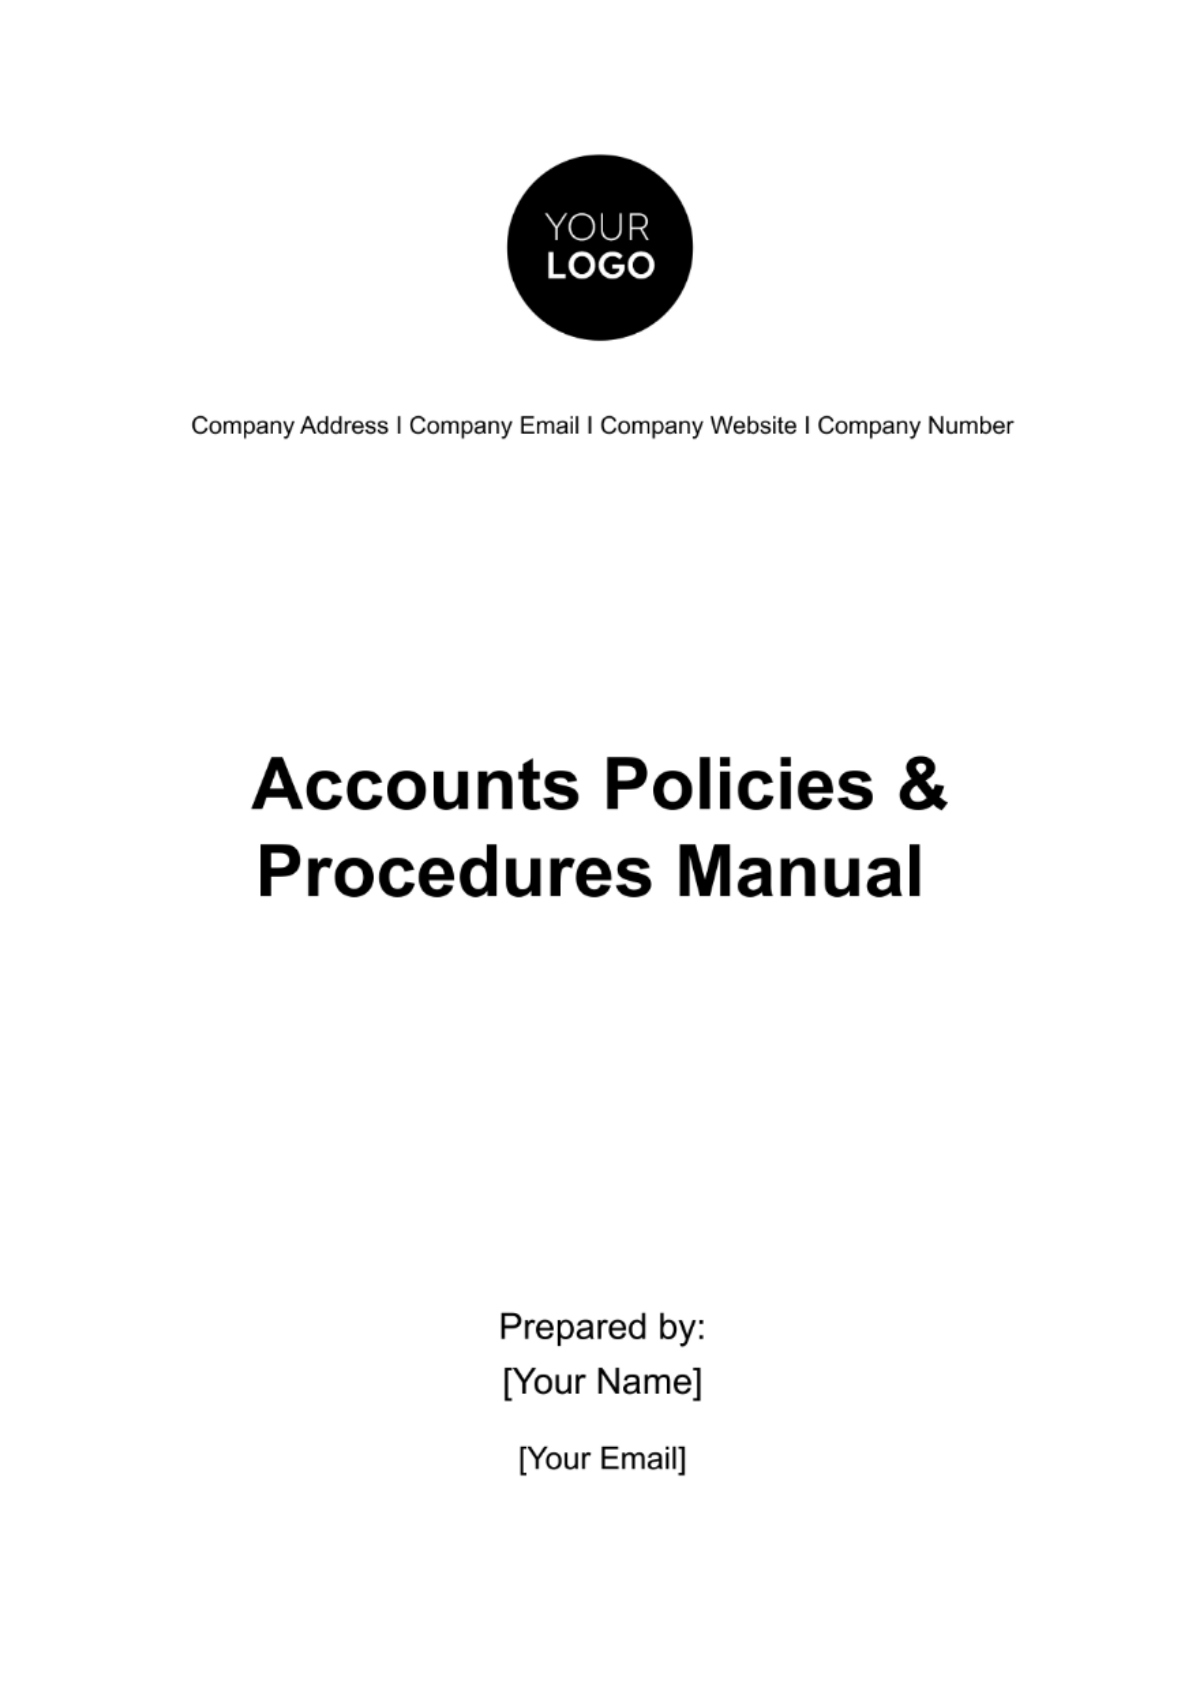 Free Accounts Policies & Procedures Manual Template